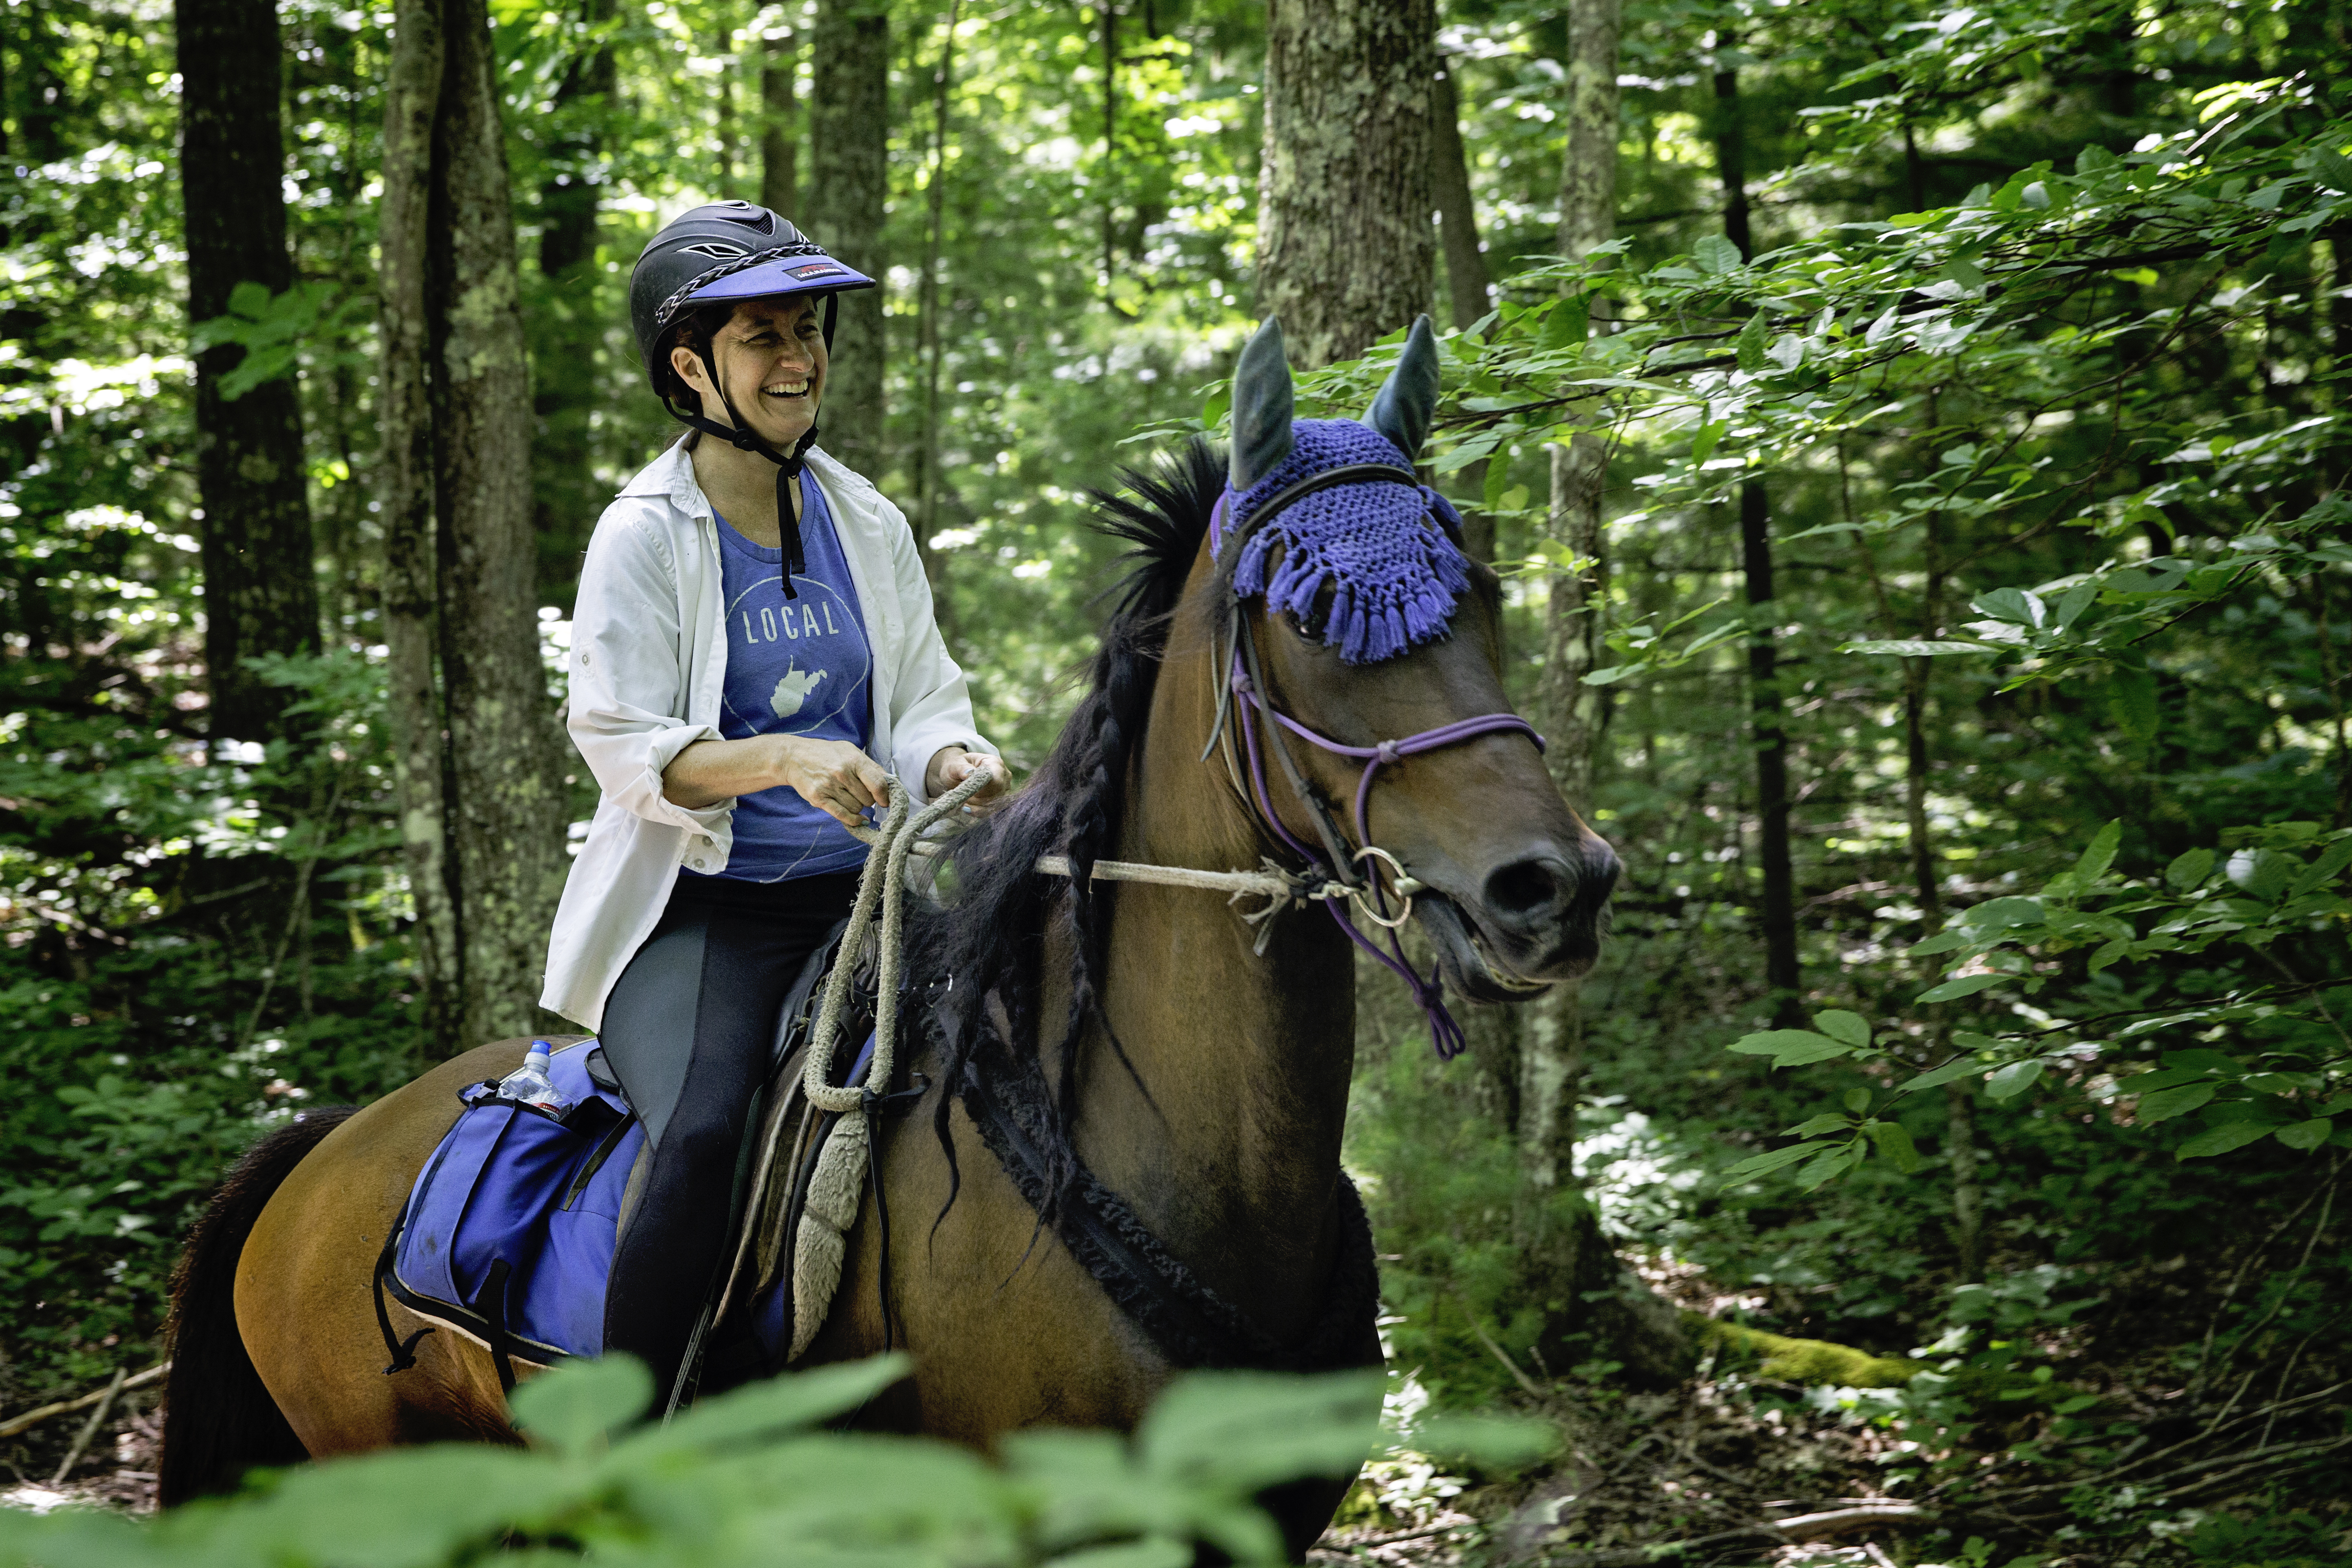 Horseback Riding At Camp Creek State Park Mercer County Wv Mercer County Wv